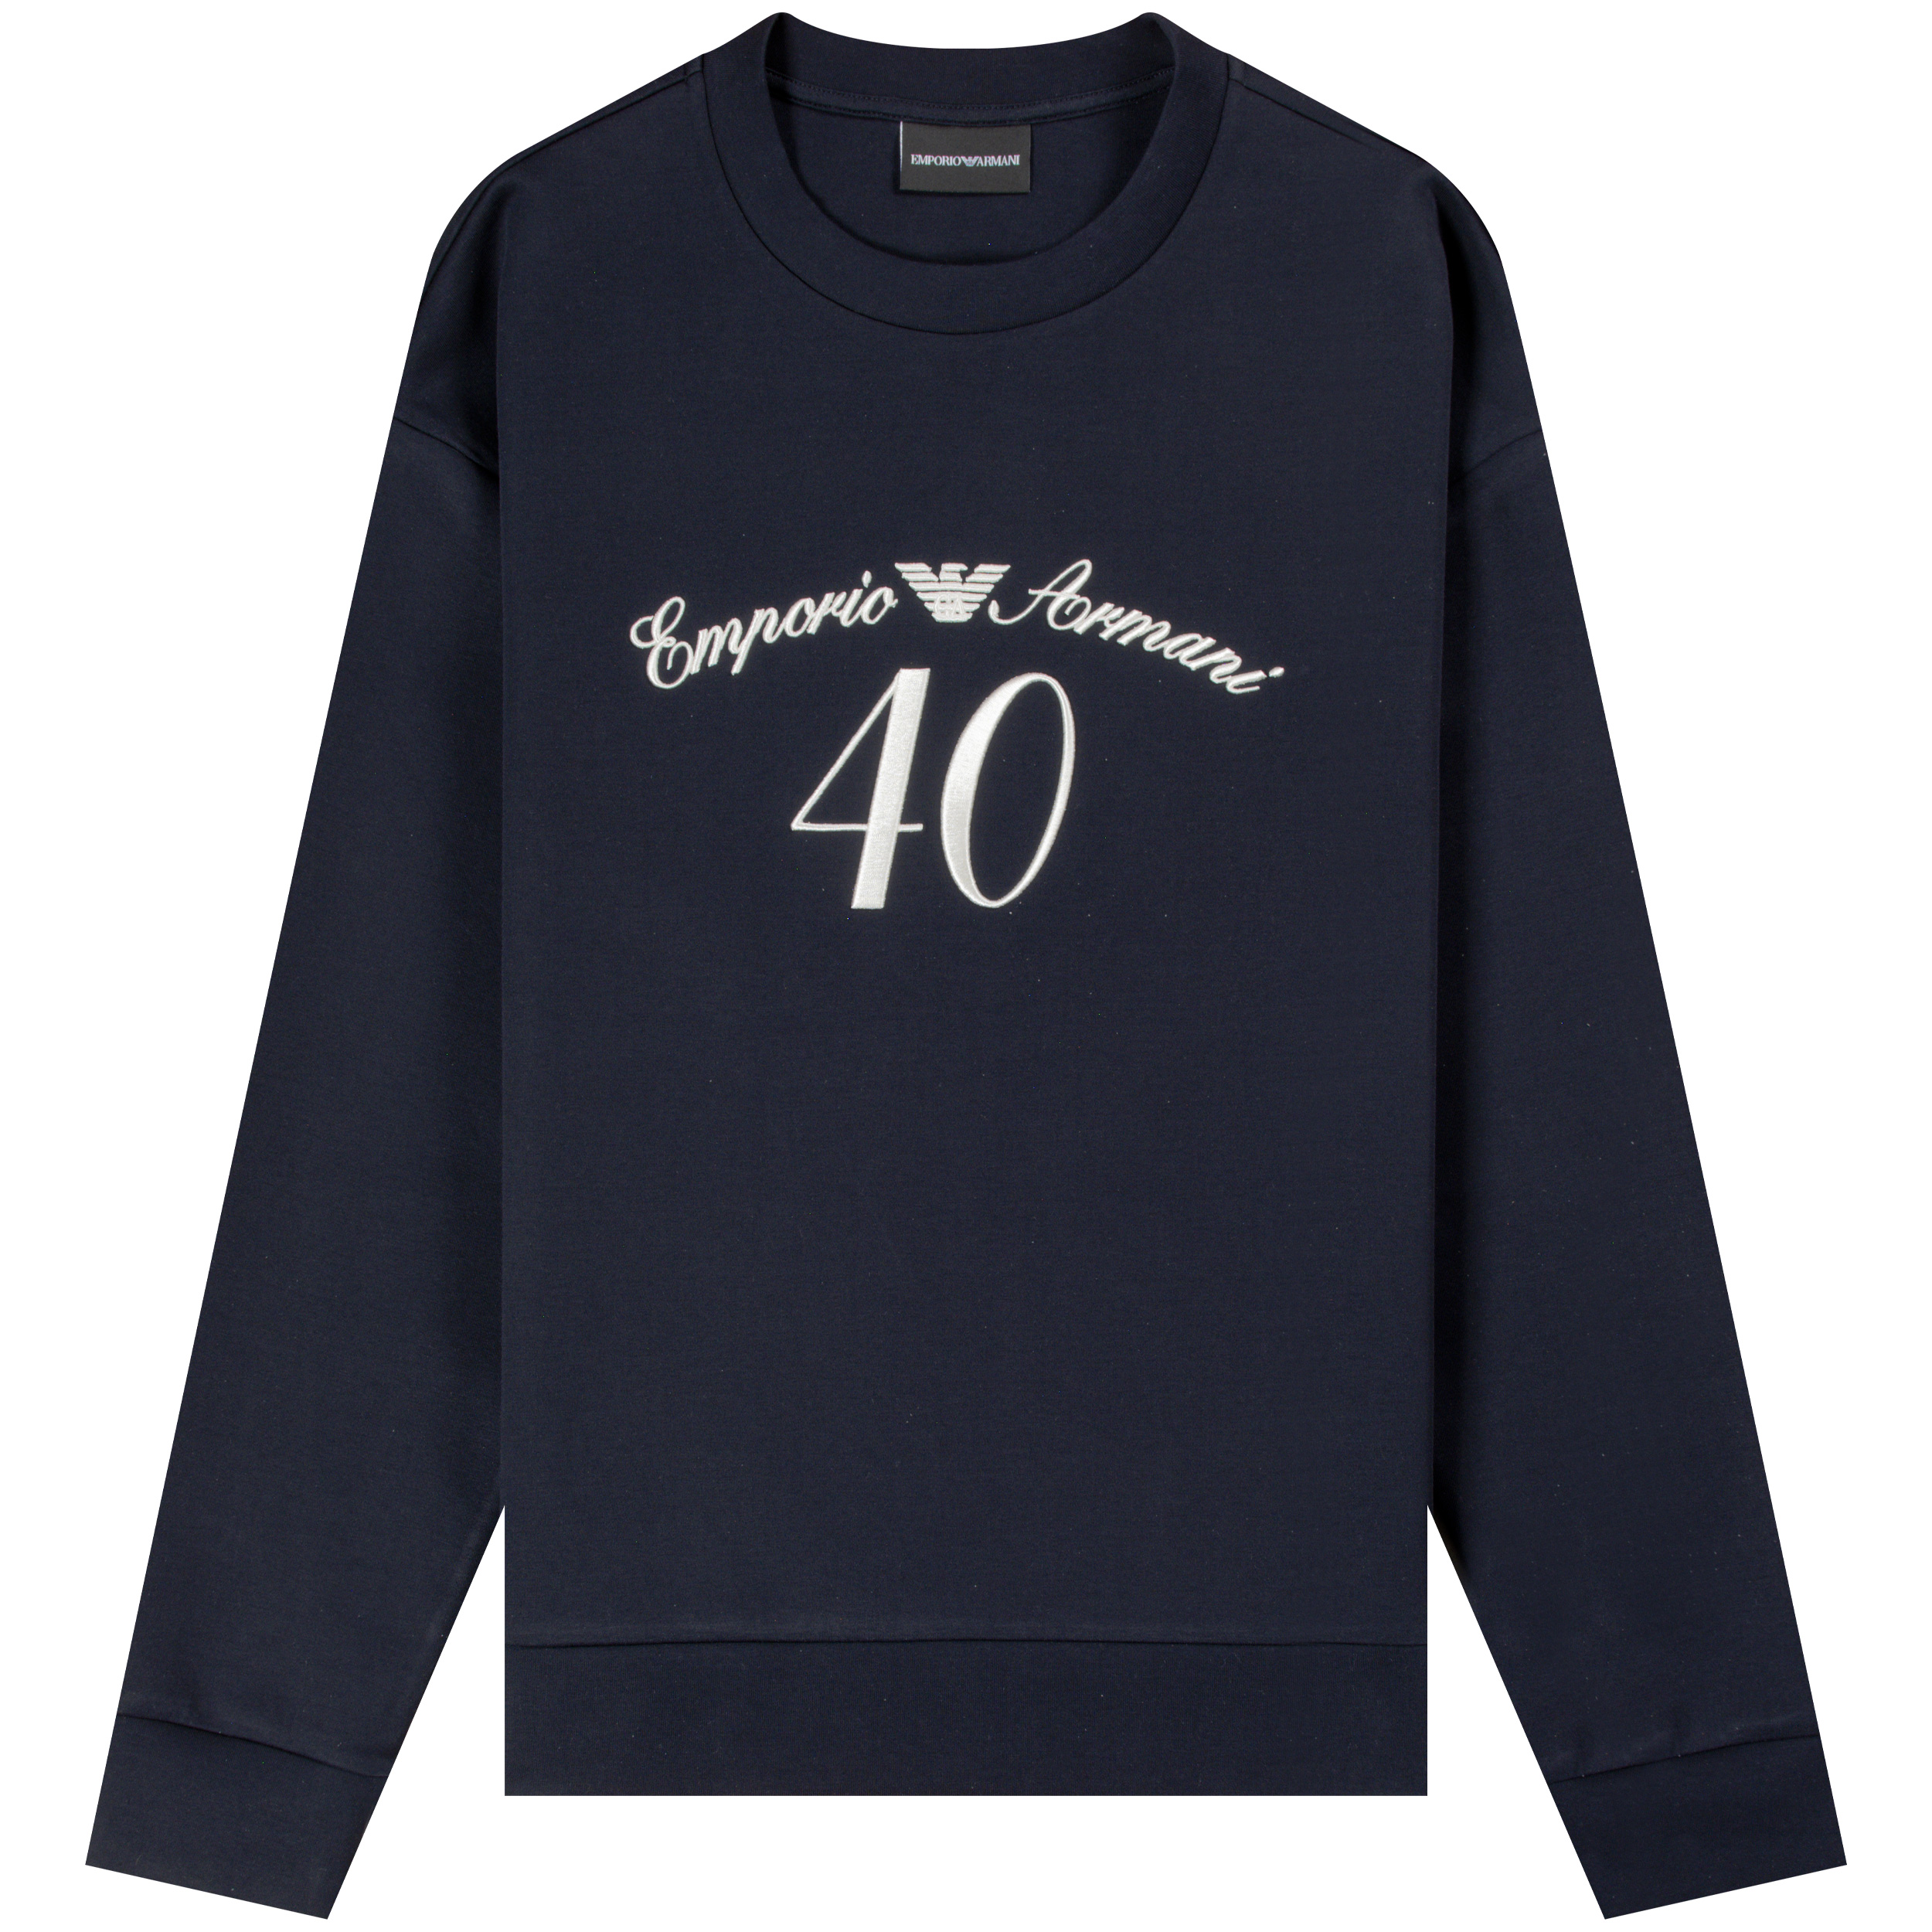 Emporio Armani ’40th Anniversary’ Sweatshirt Navy